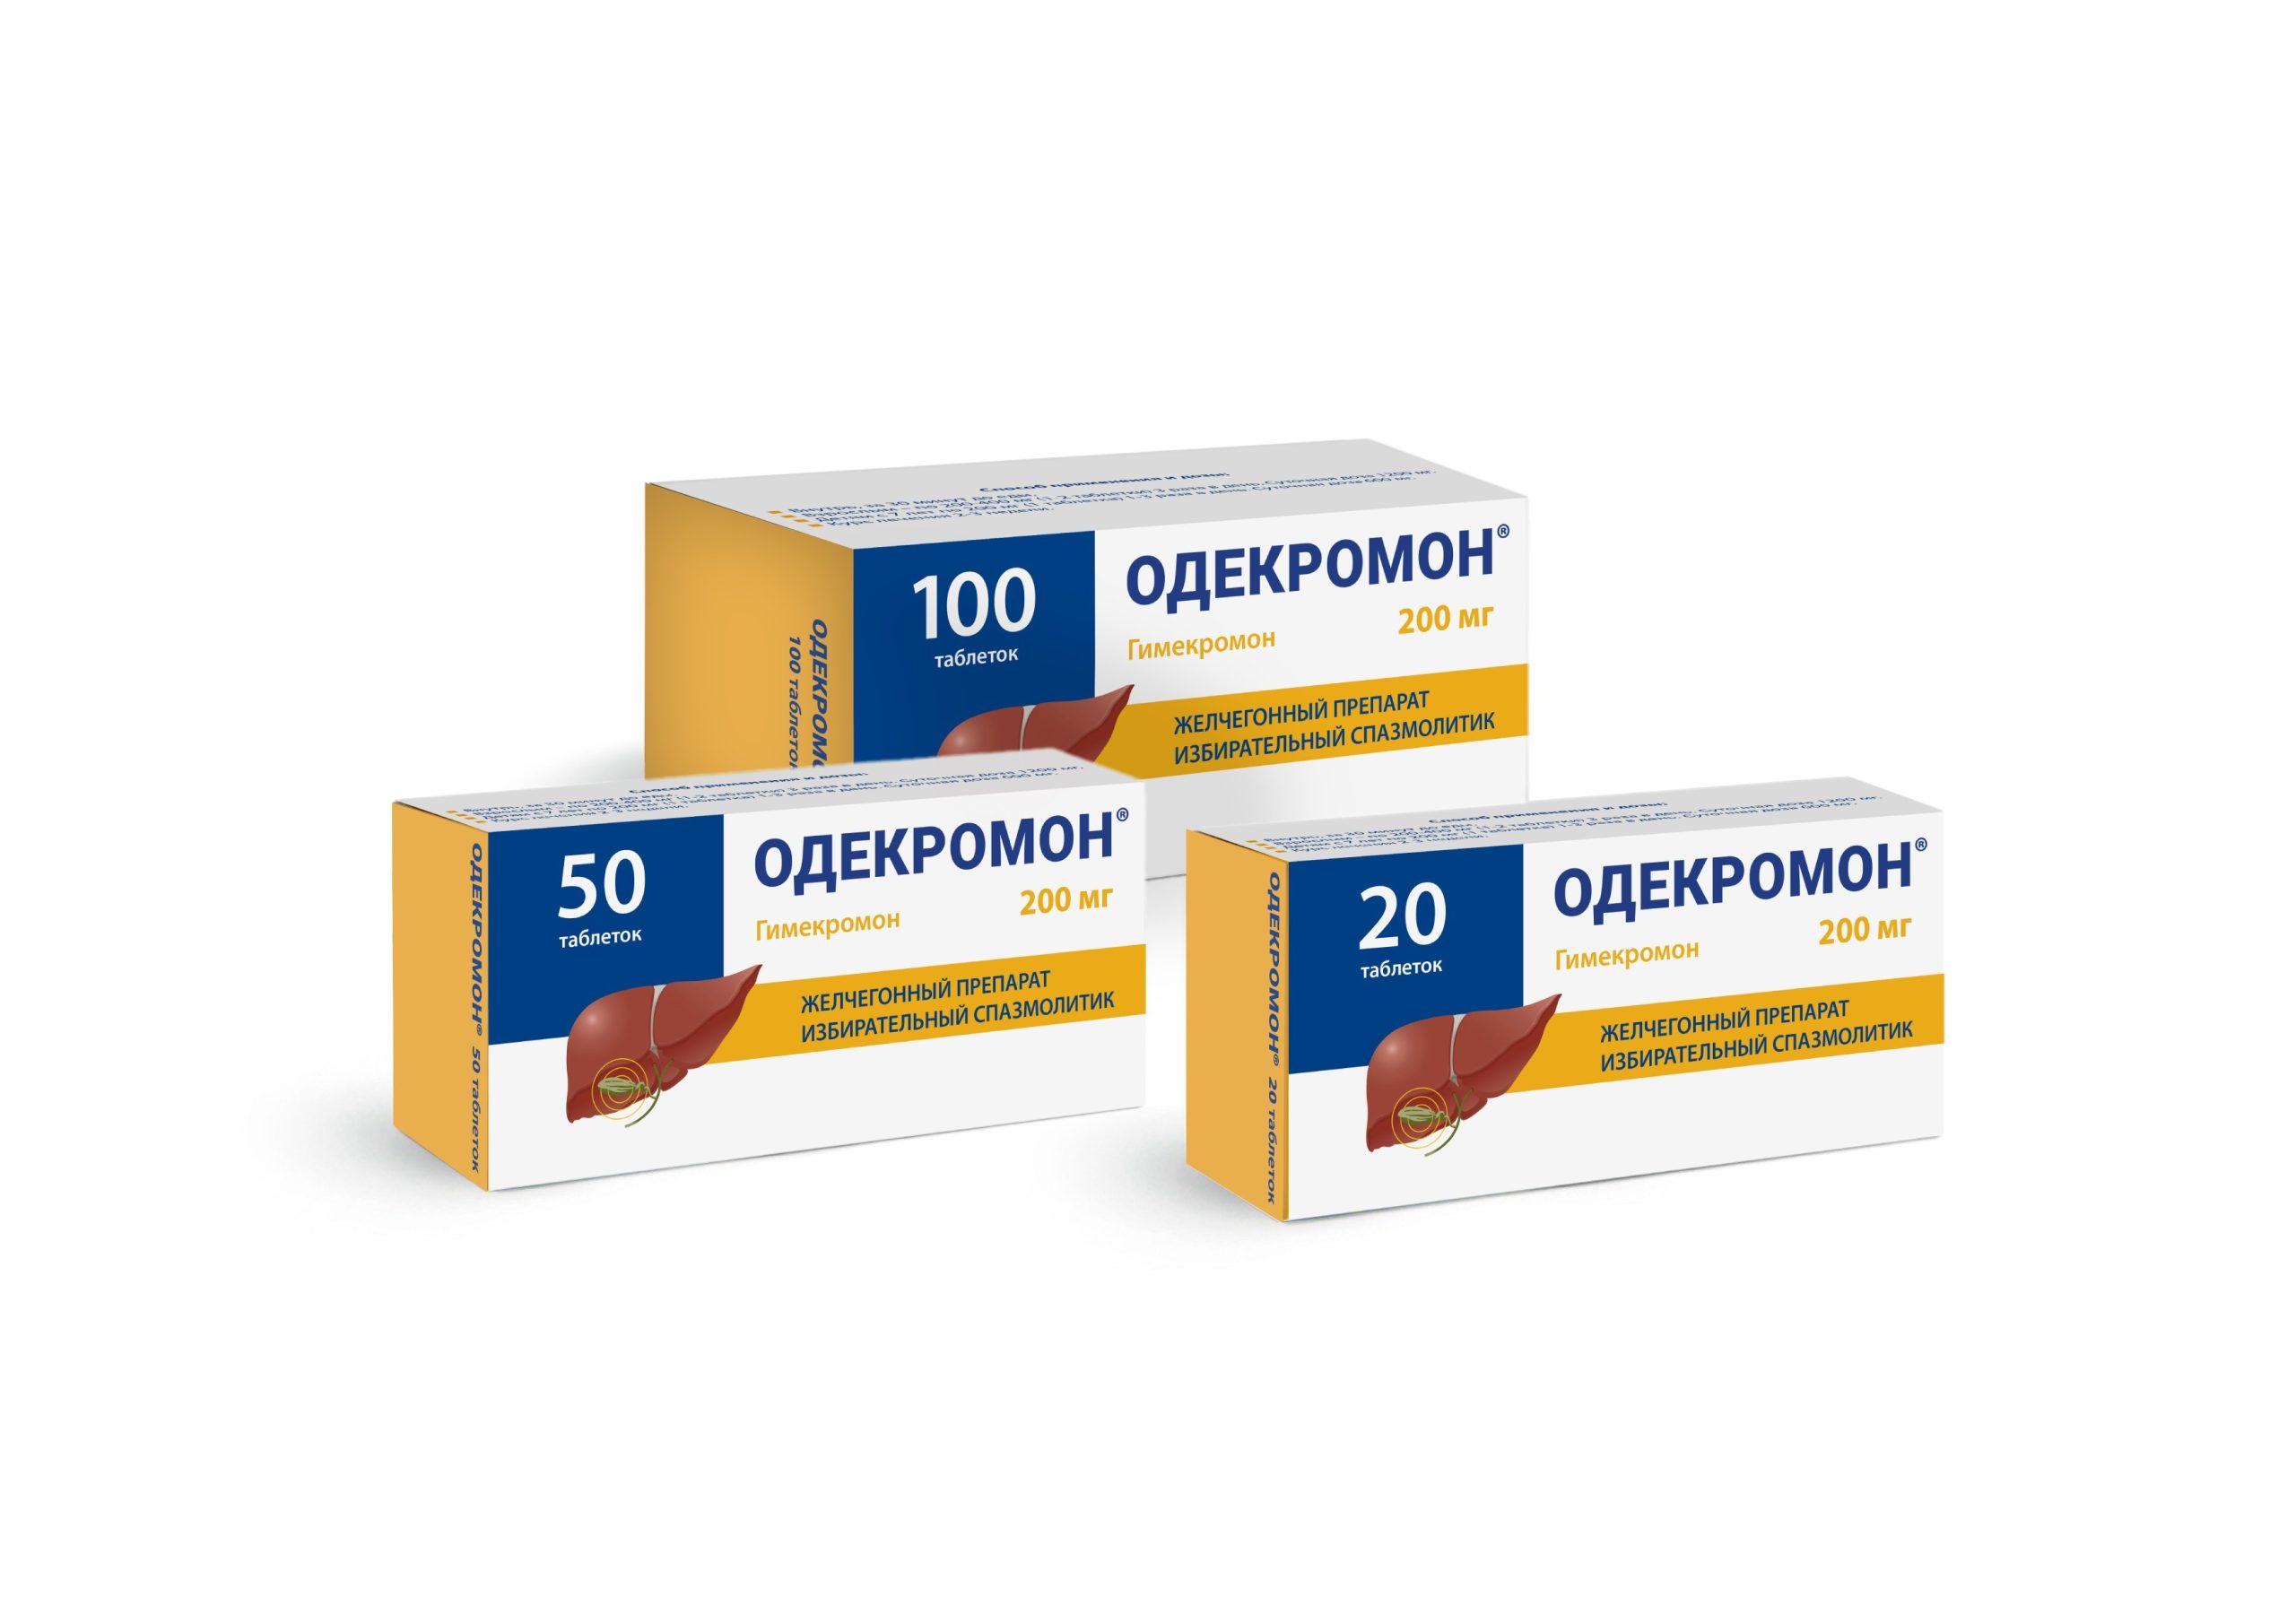 Компания «Сотекс» объявила о продвижении препарата «Одекромон .